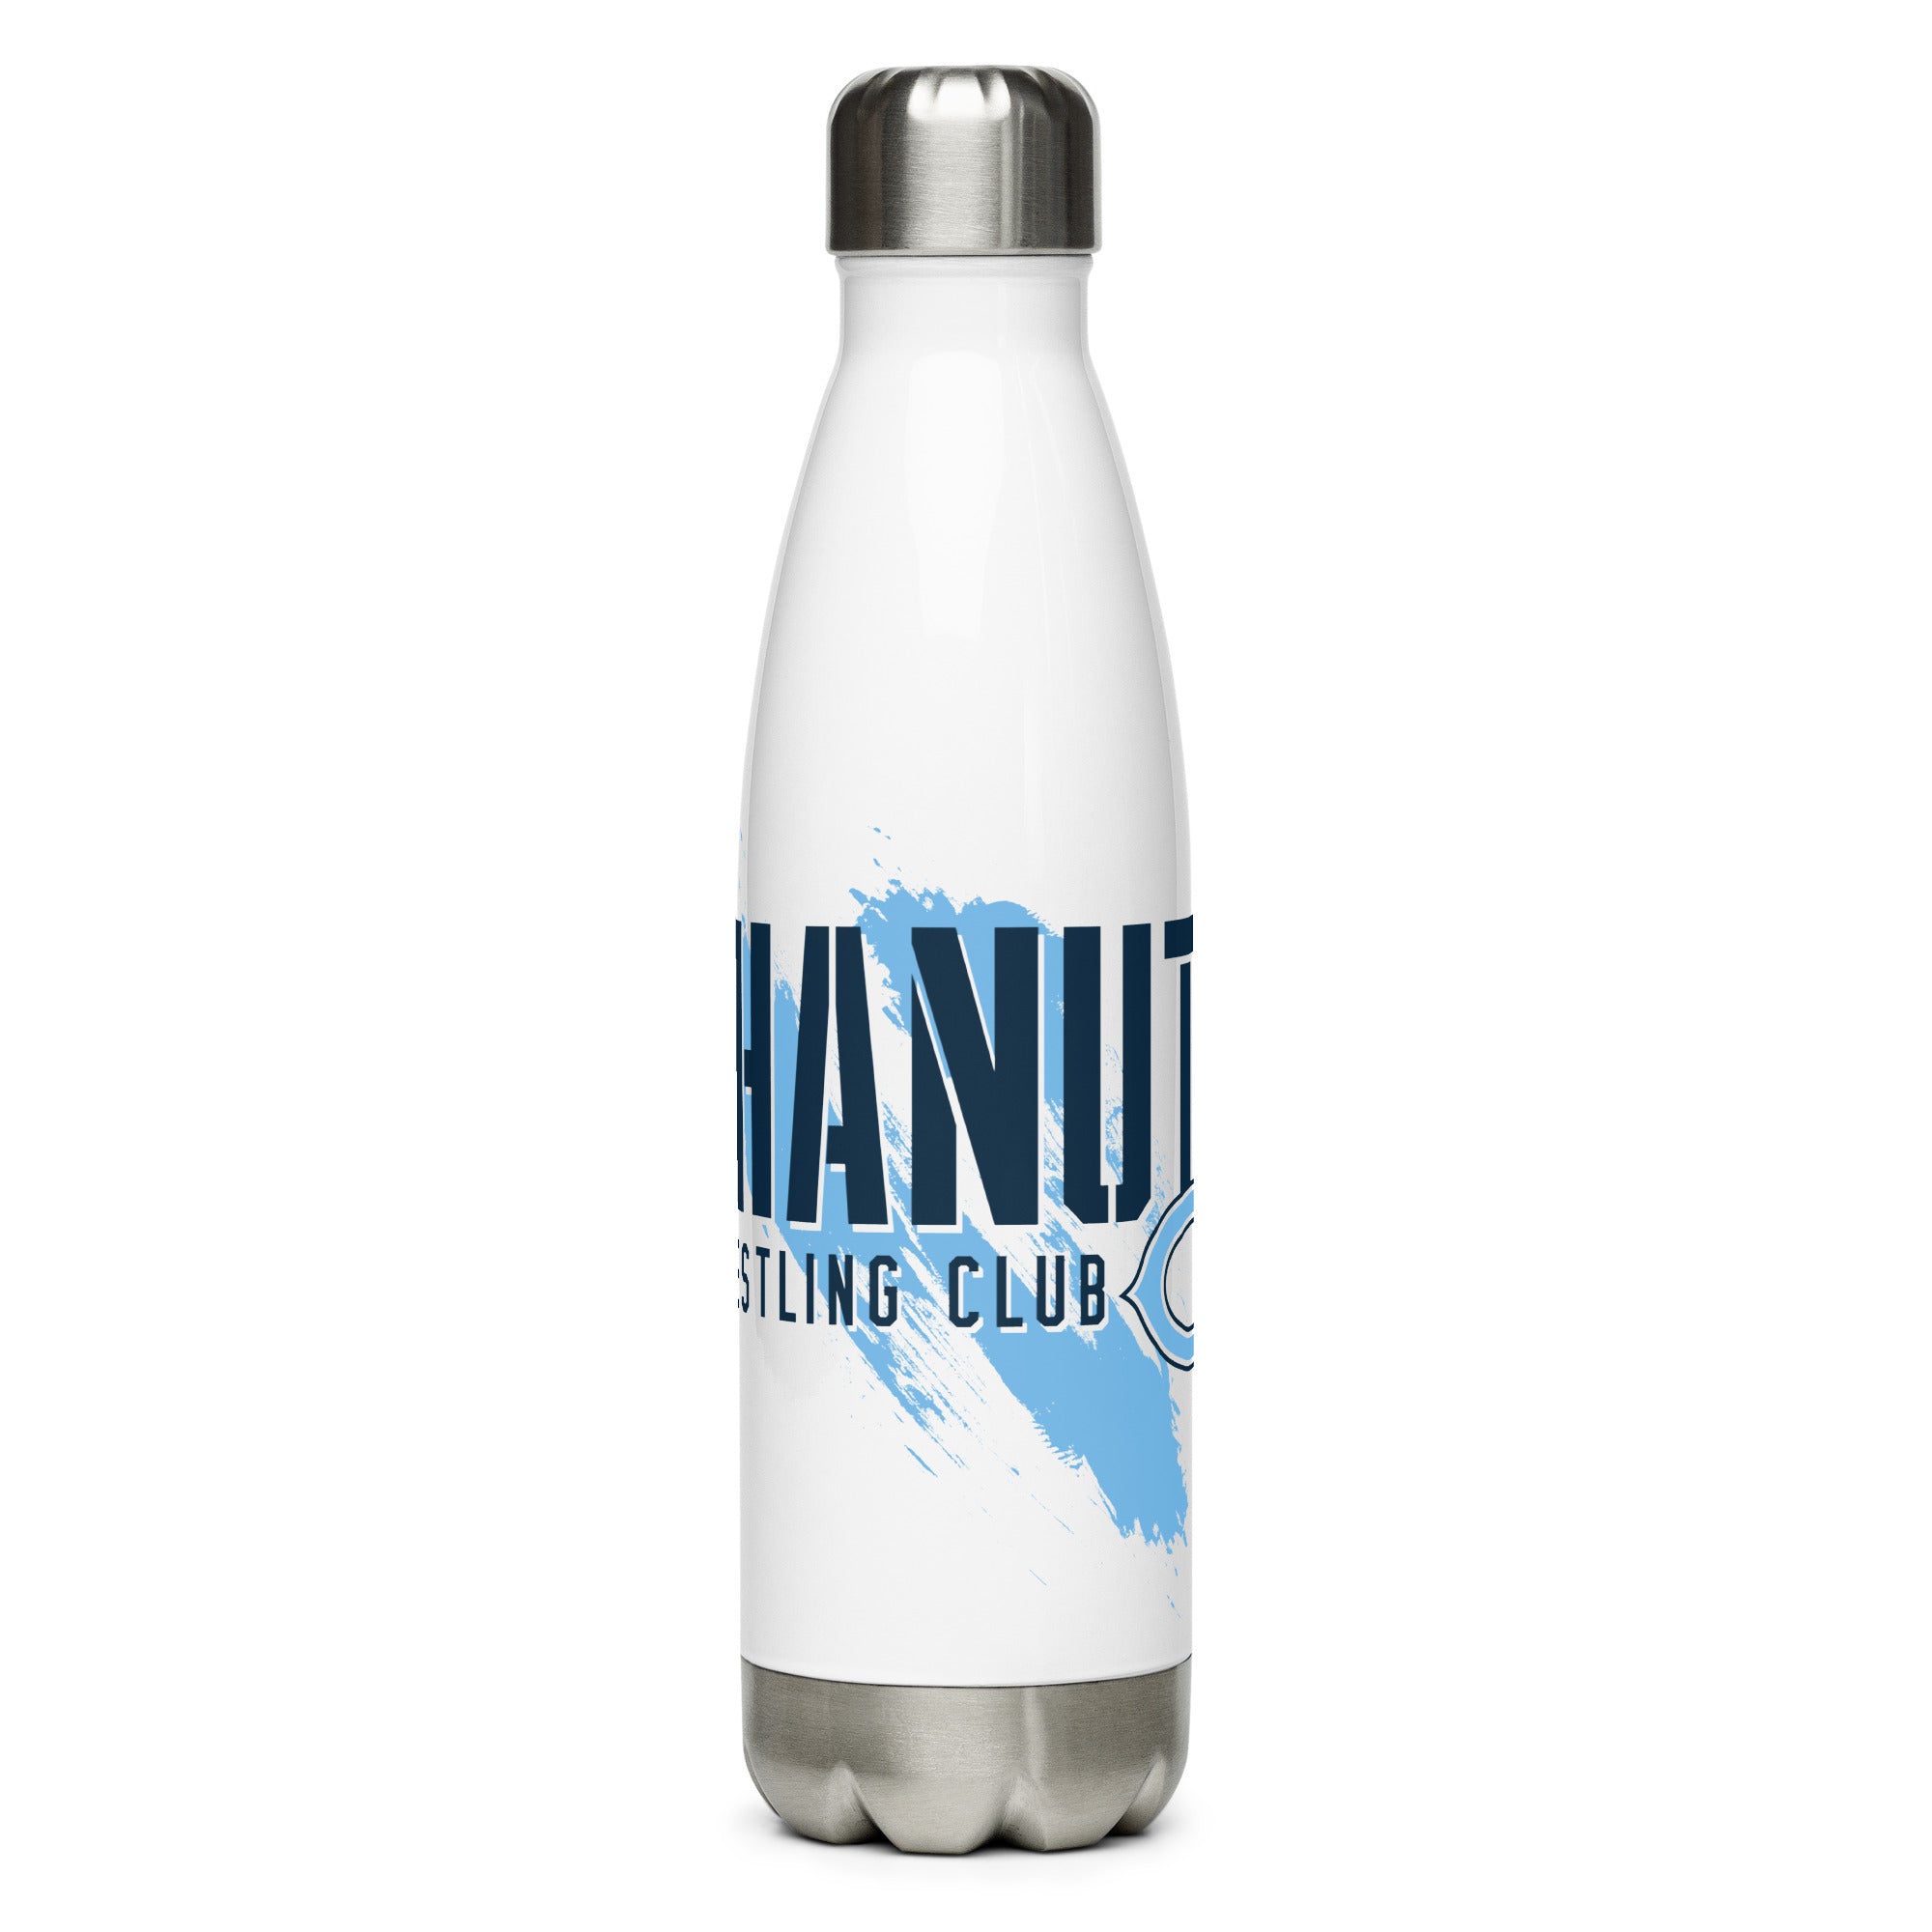 Chanute Wrestling Club Stainless Steel Water Bottle